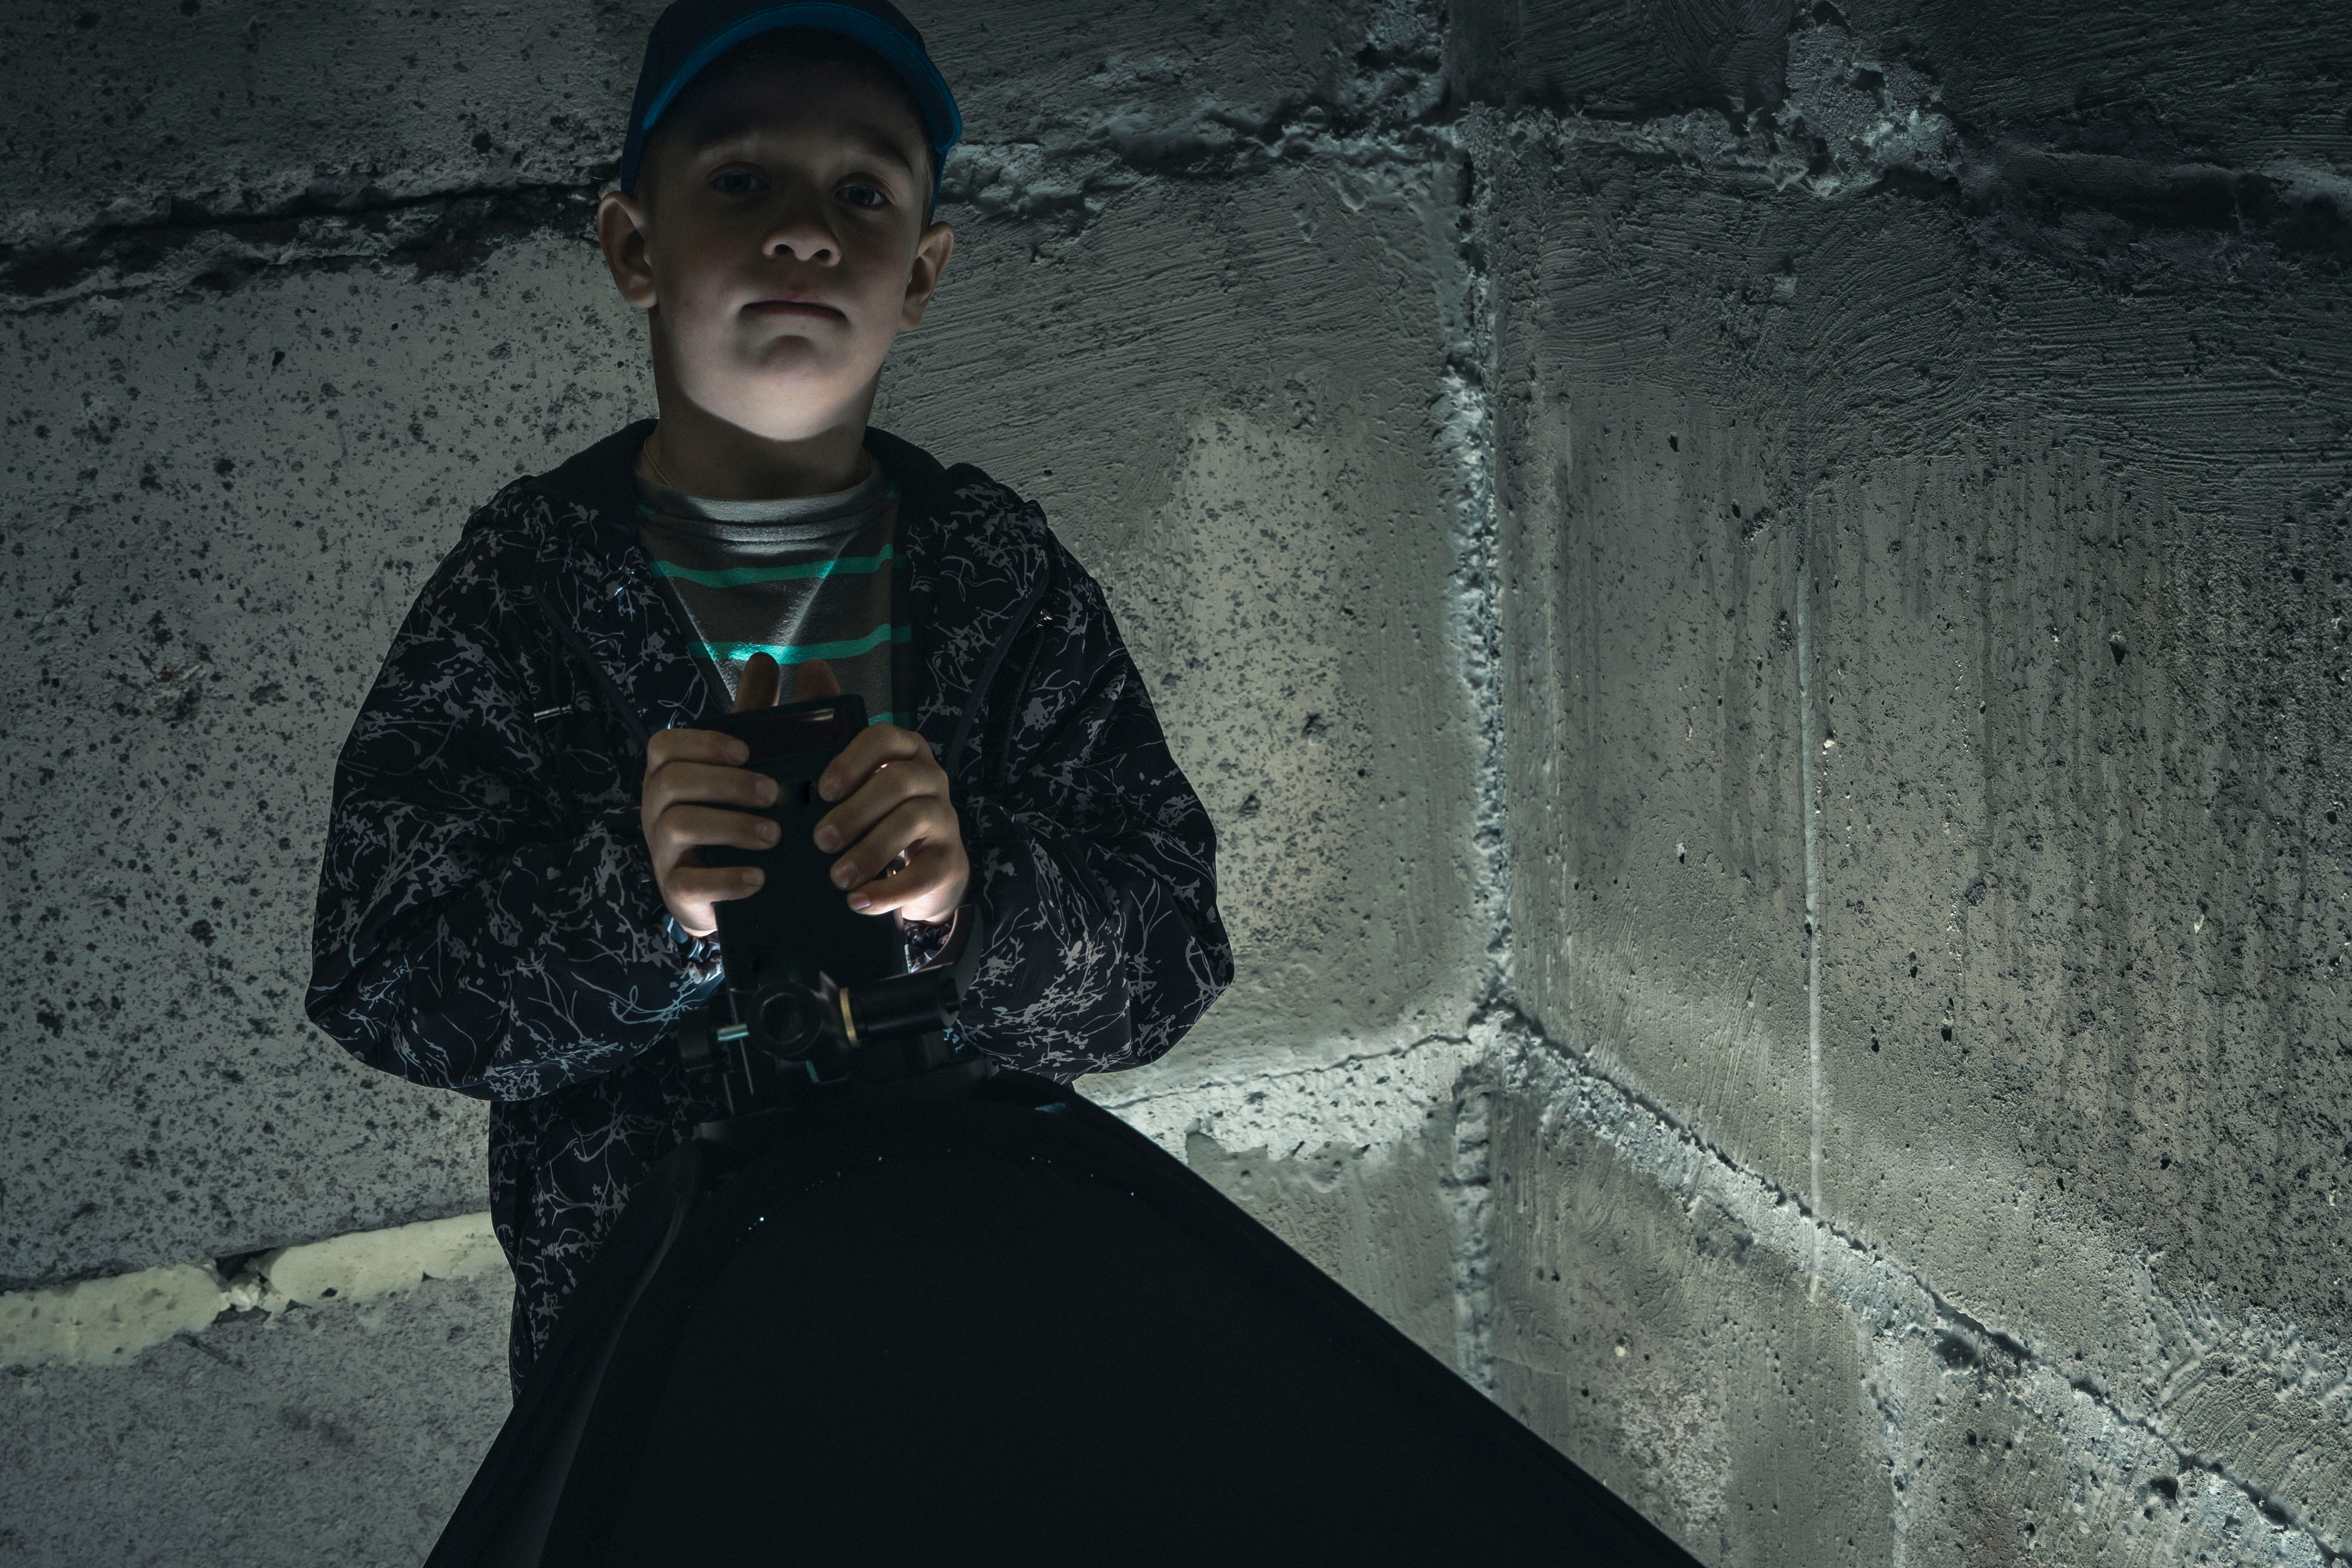 Boy in a dark concrete basement. | Source: Shutterstock